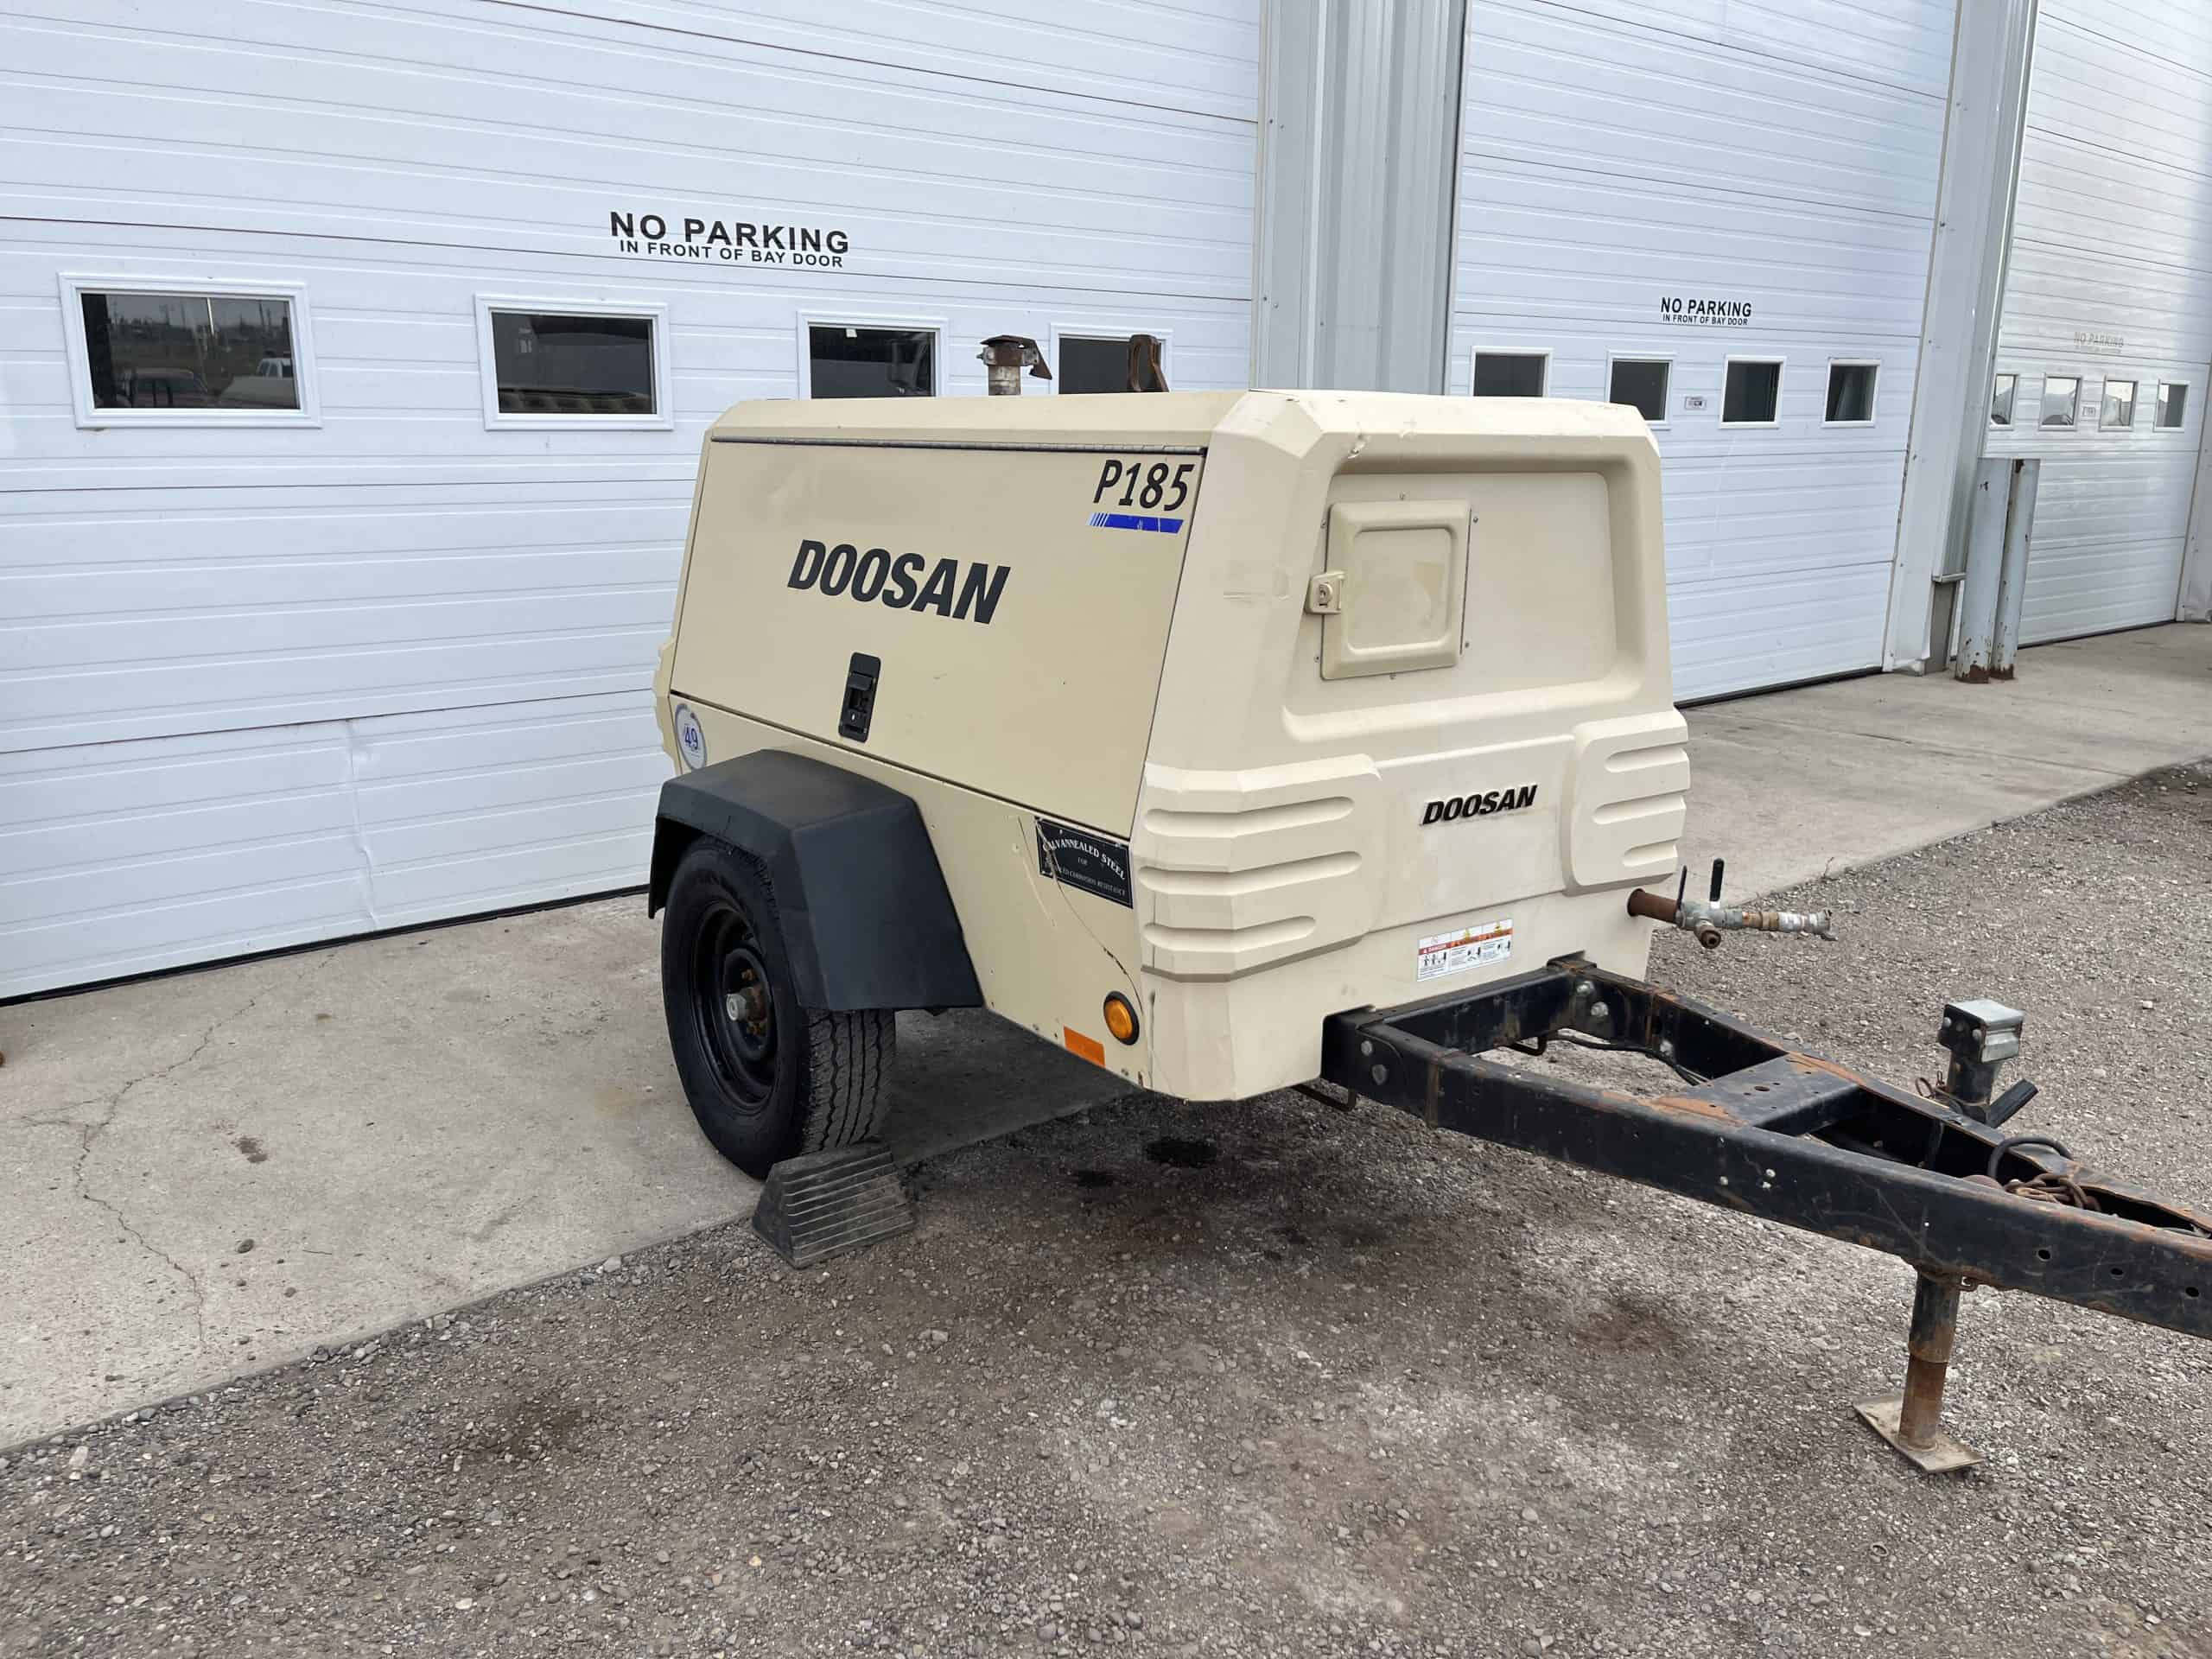 Doosan P185 for sale tow behind diesel air compressor in Regina & Saskatoon SK, Winnipeg & Brandon Manitoba.